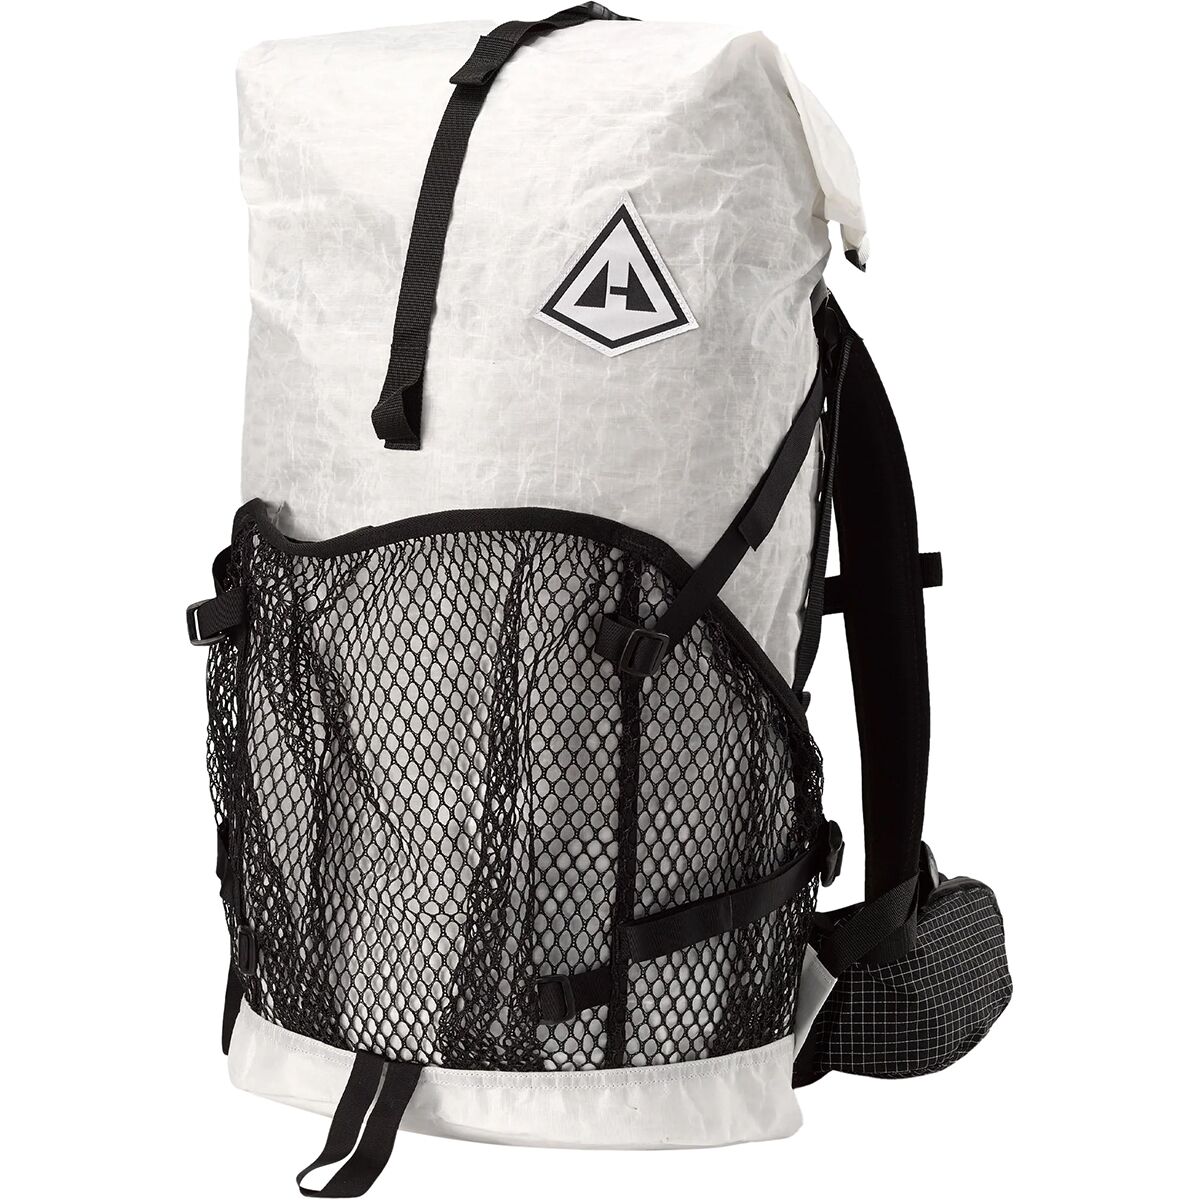 Hyperlite Mountain Gear Windrider 40L Backpack